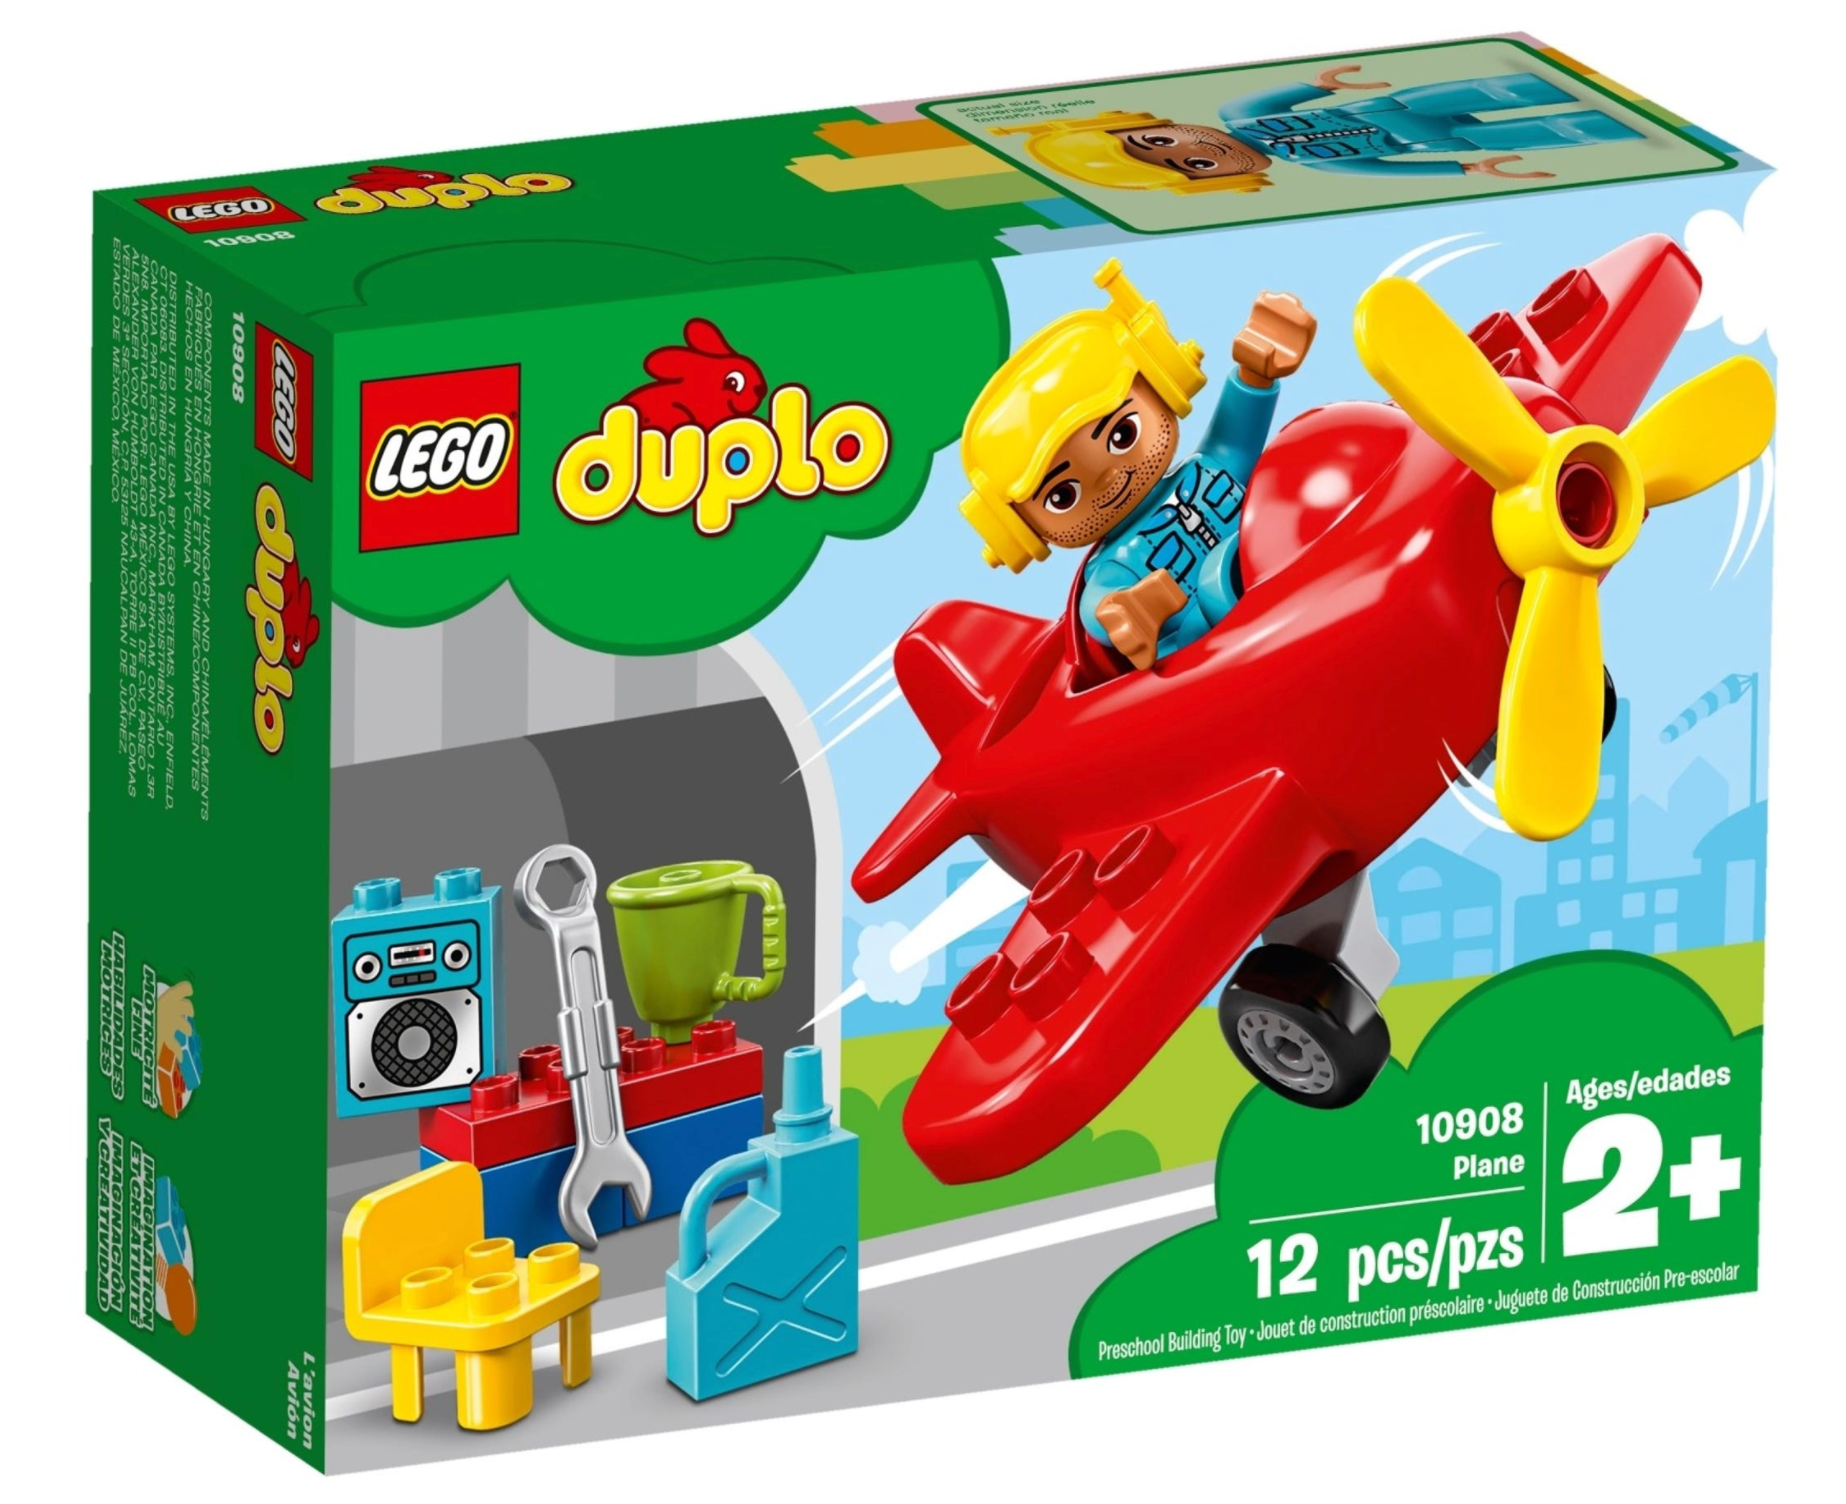 LEGO: DUPLO - Plane